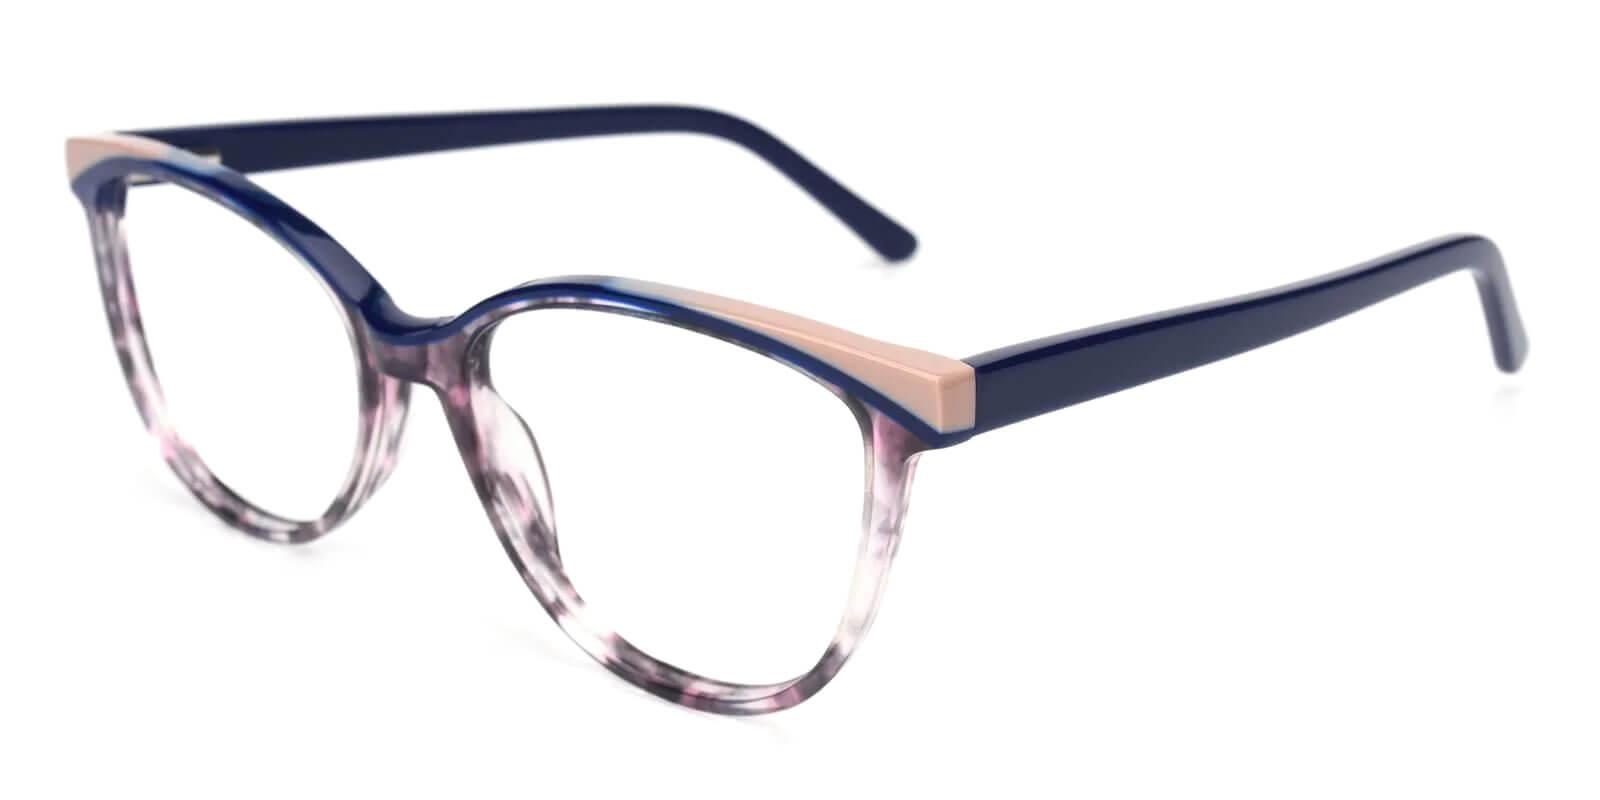 Salzburg Purple Acetate Eyeglasses , UniversalBridgeFit Frames from ABBE Glasses